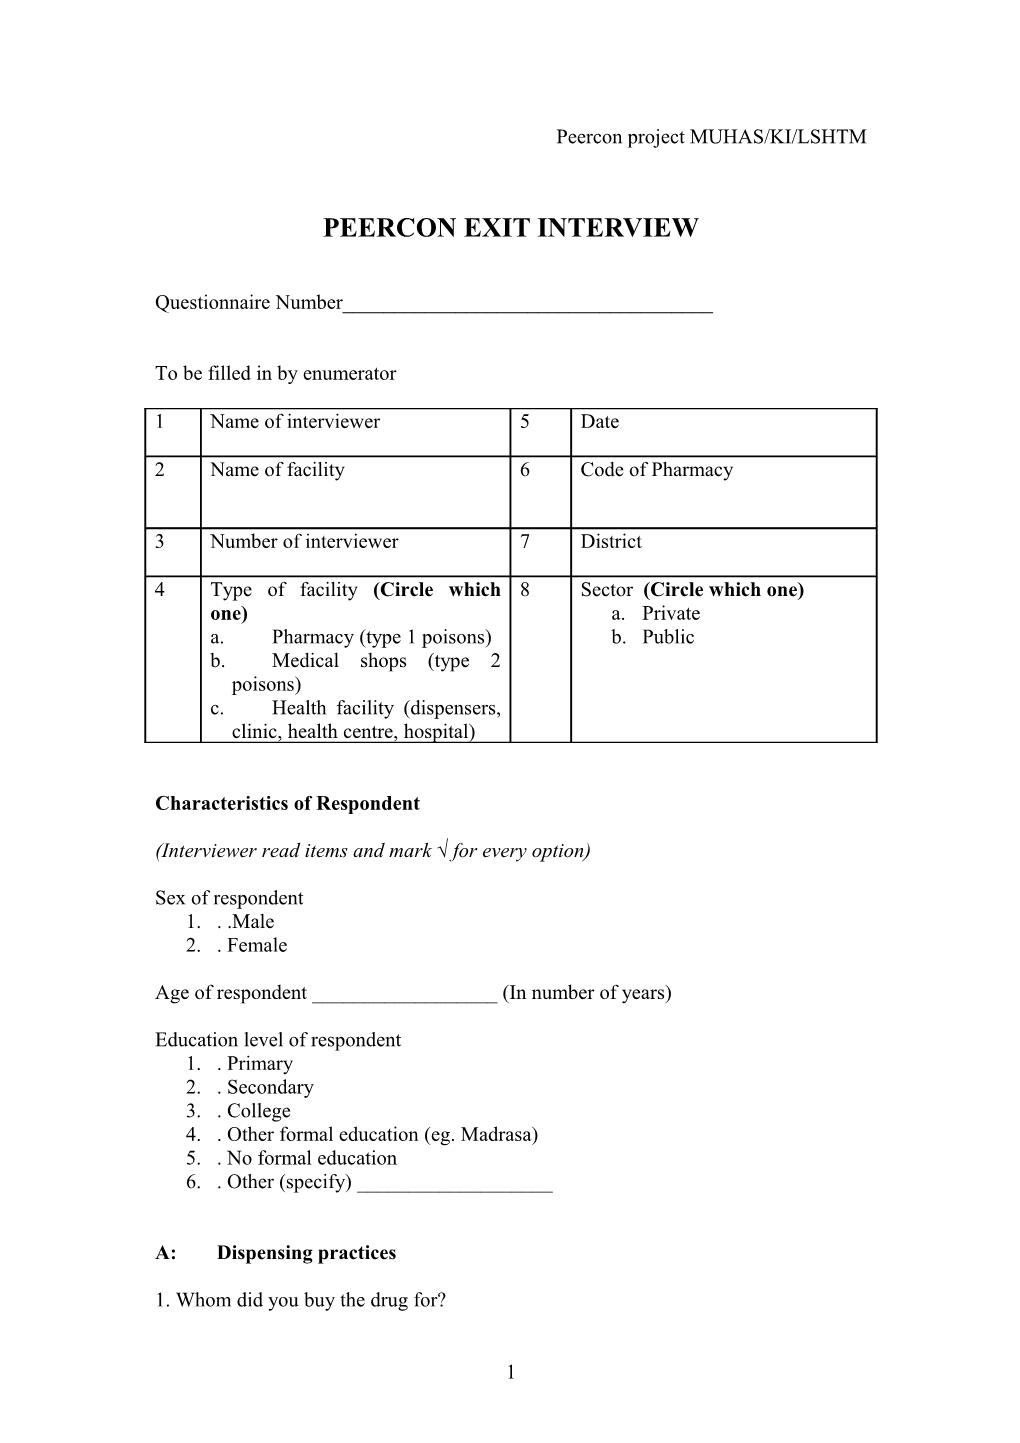 Consent Form for the Providers for Peercon (Tanzania)